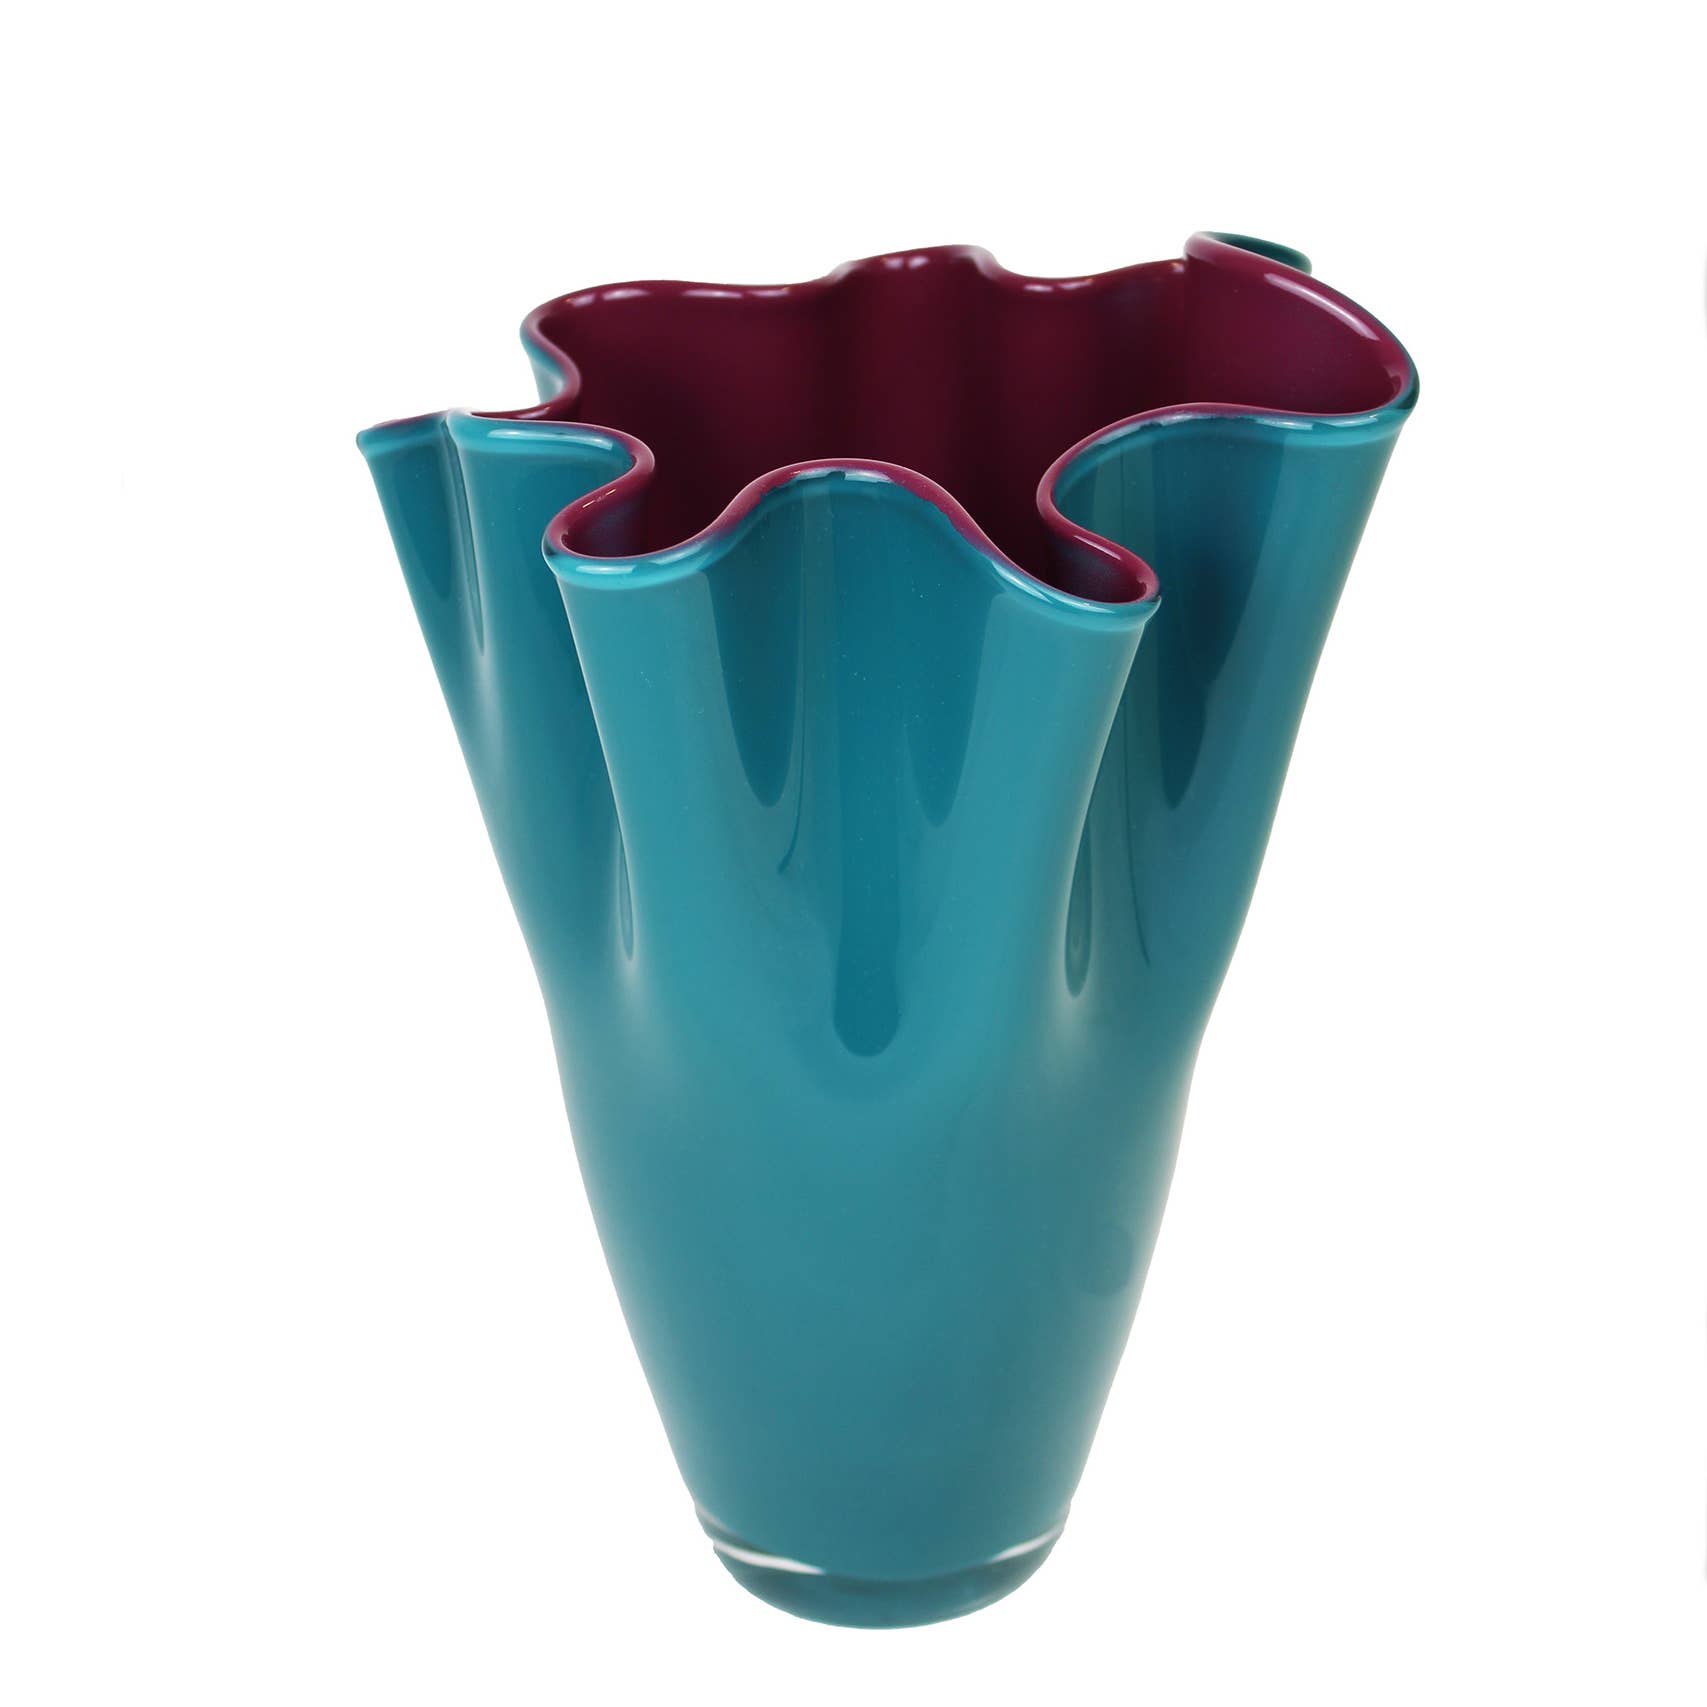 Signature Vase uas Glas in Farbe türkis und innen lila